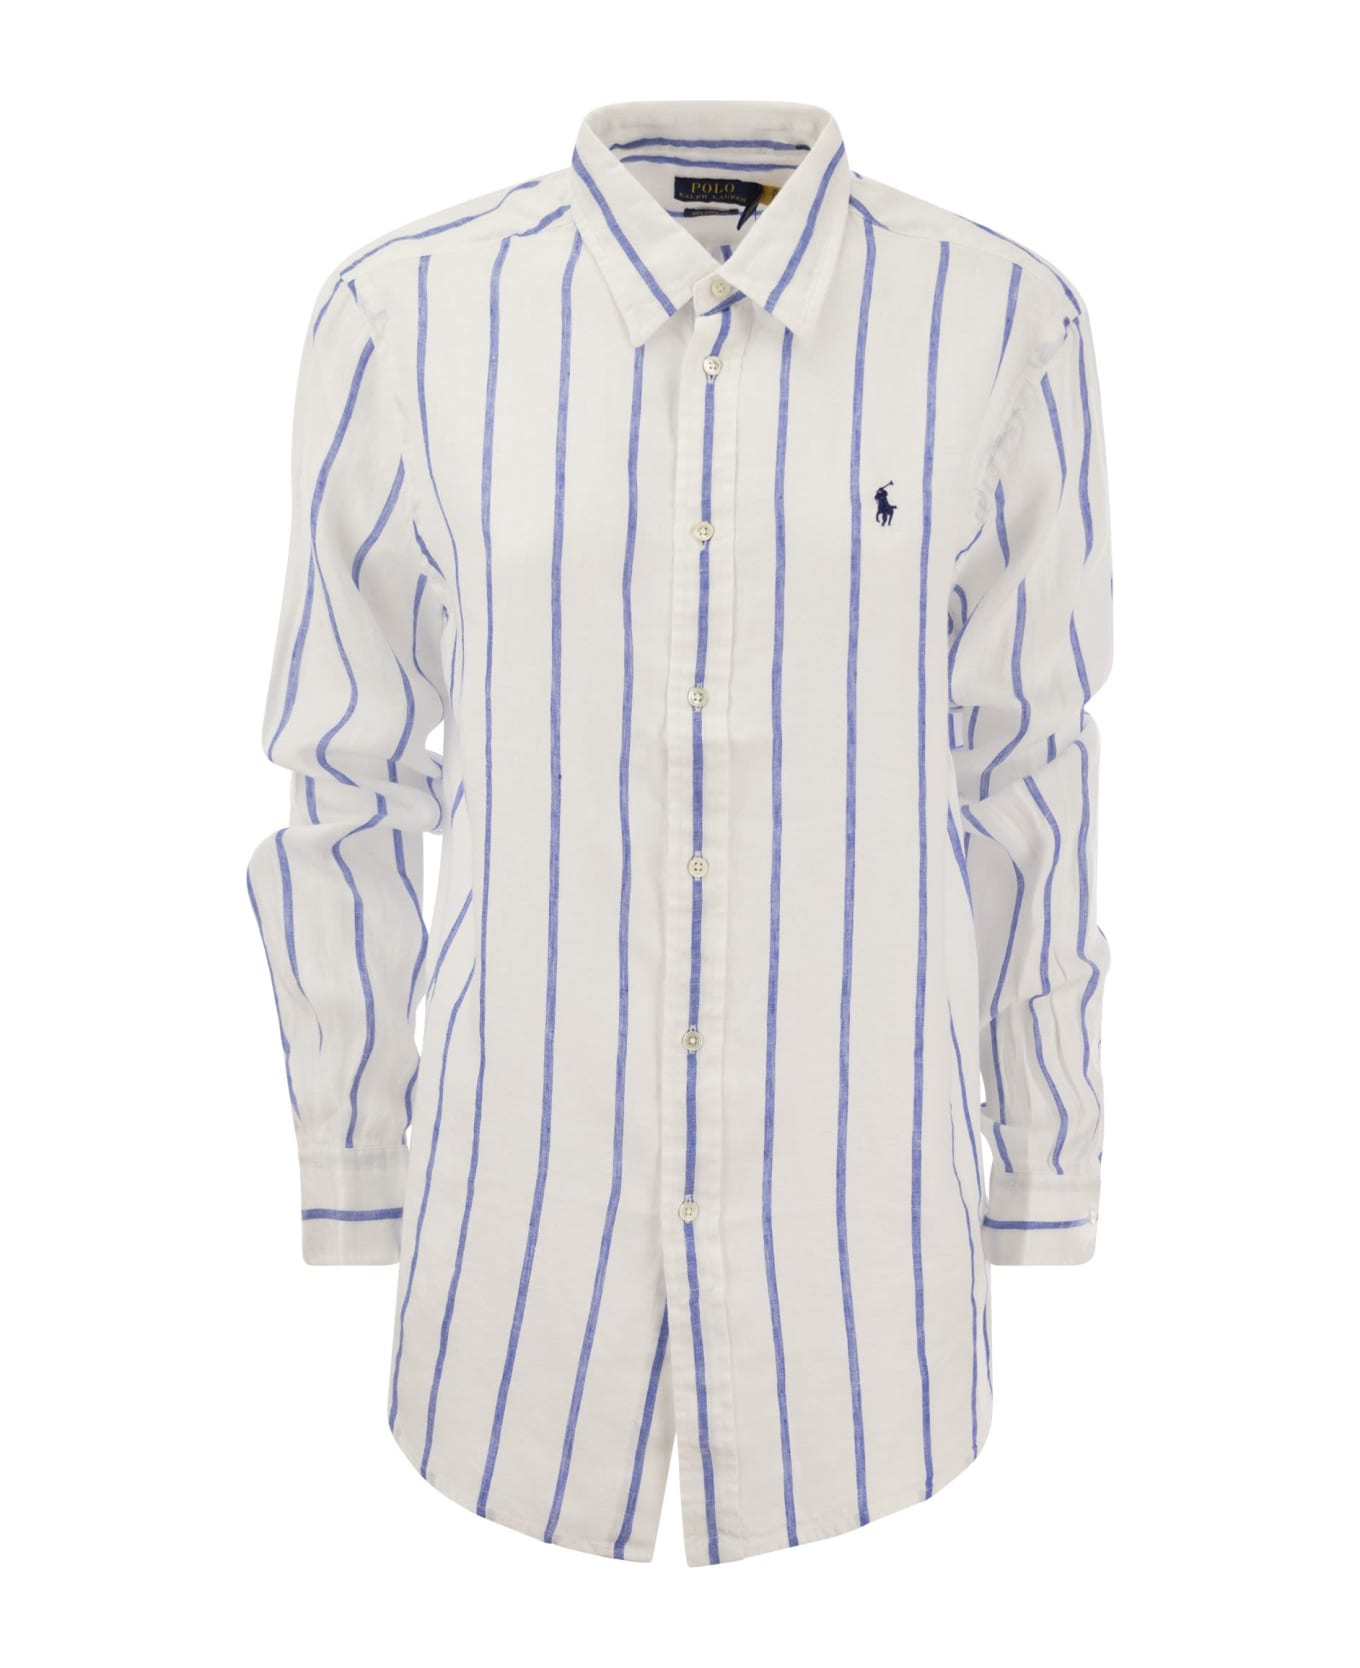 Polo Ralph Lauren Embroidered Linen Shirt - WHITEROYAL